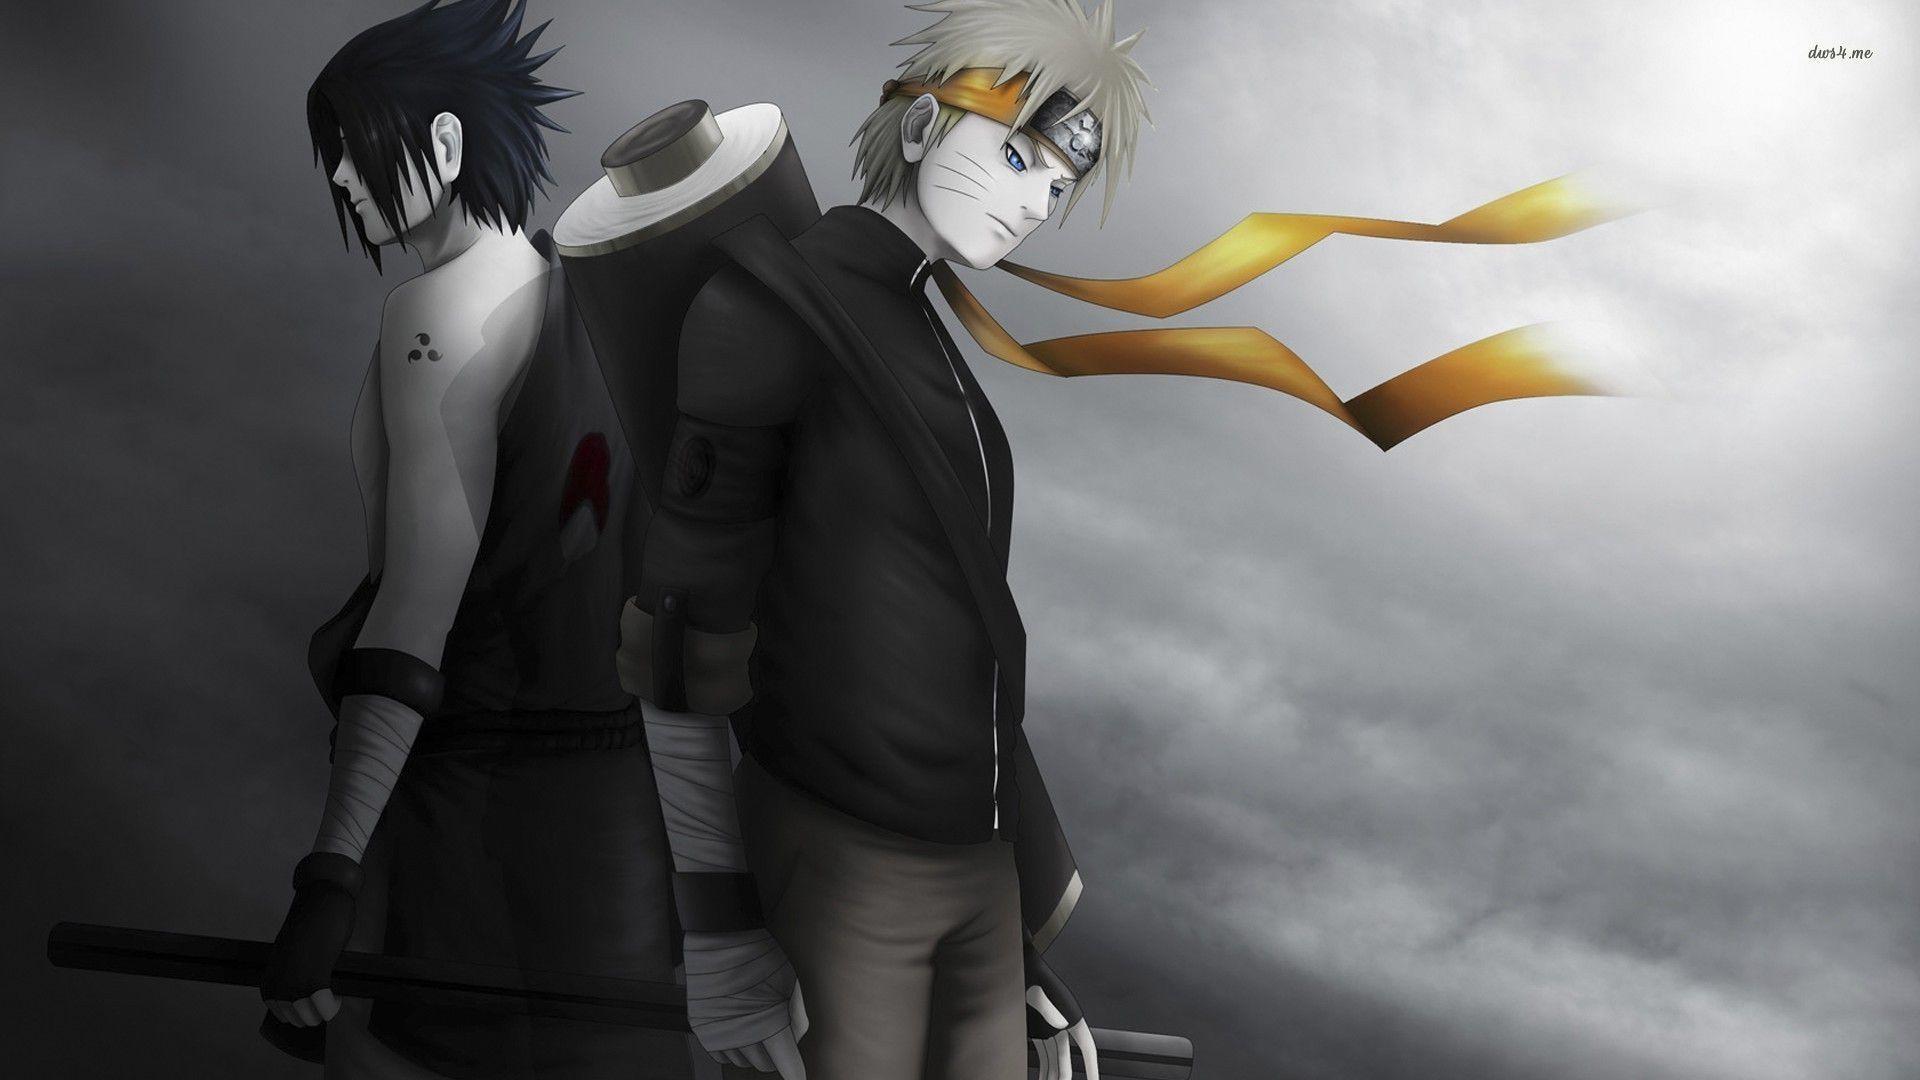 Naruto Sasuke Shippuden Black and White Wallpaper HD is a fantastic